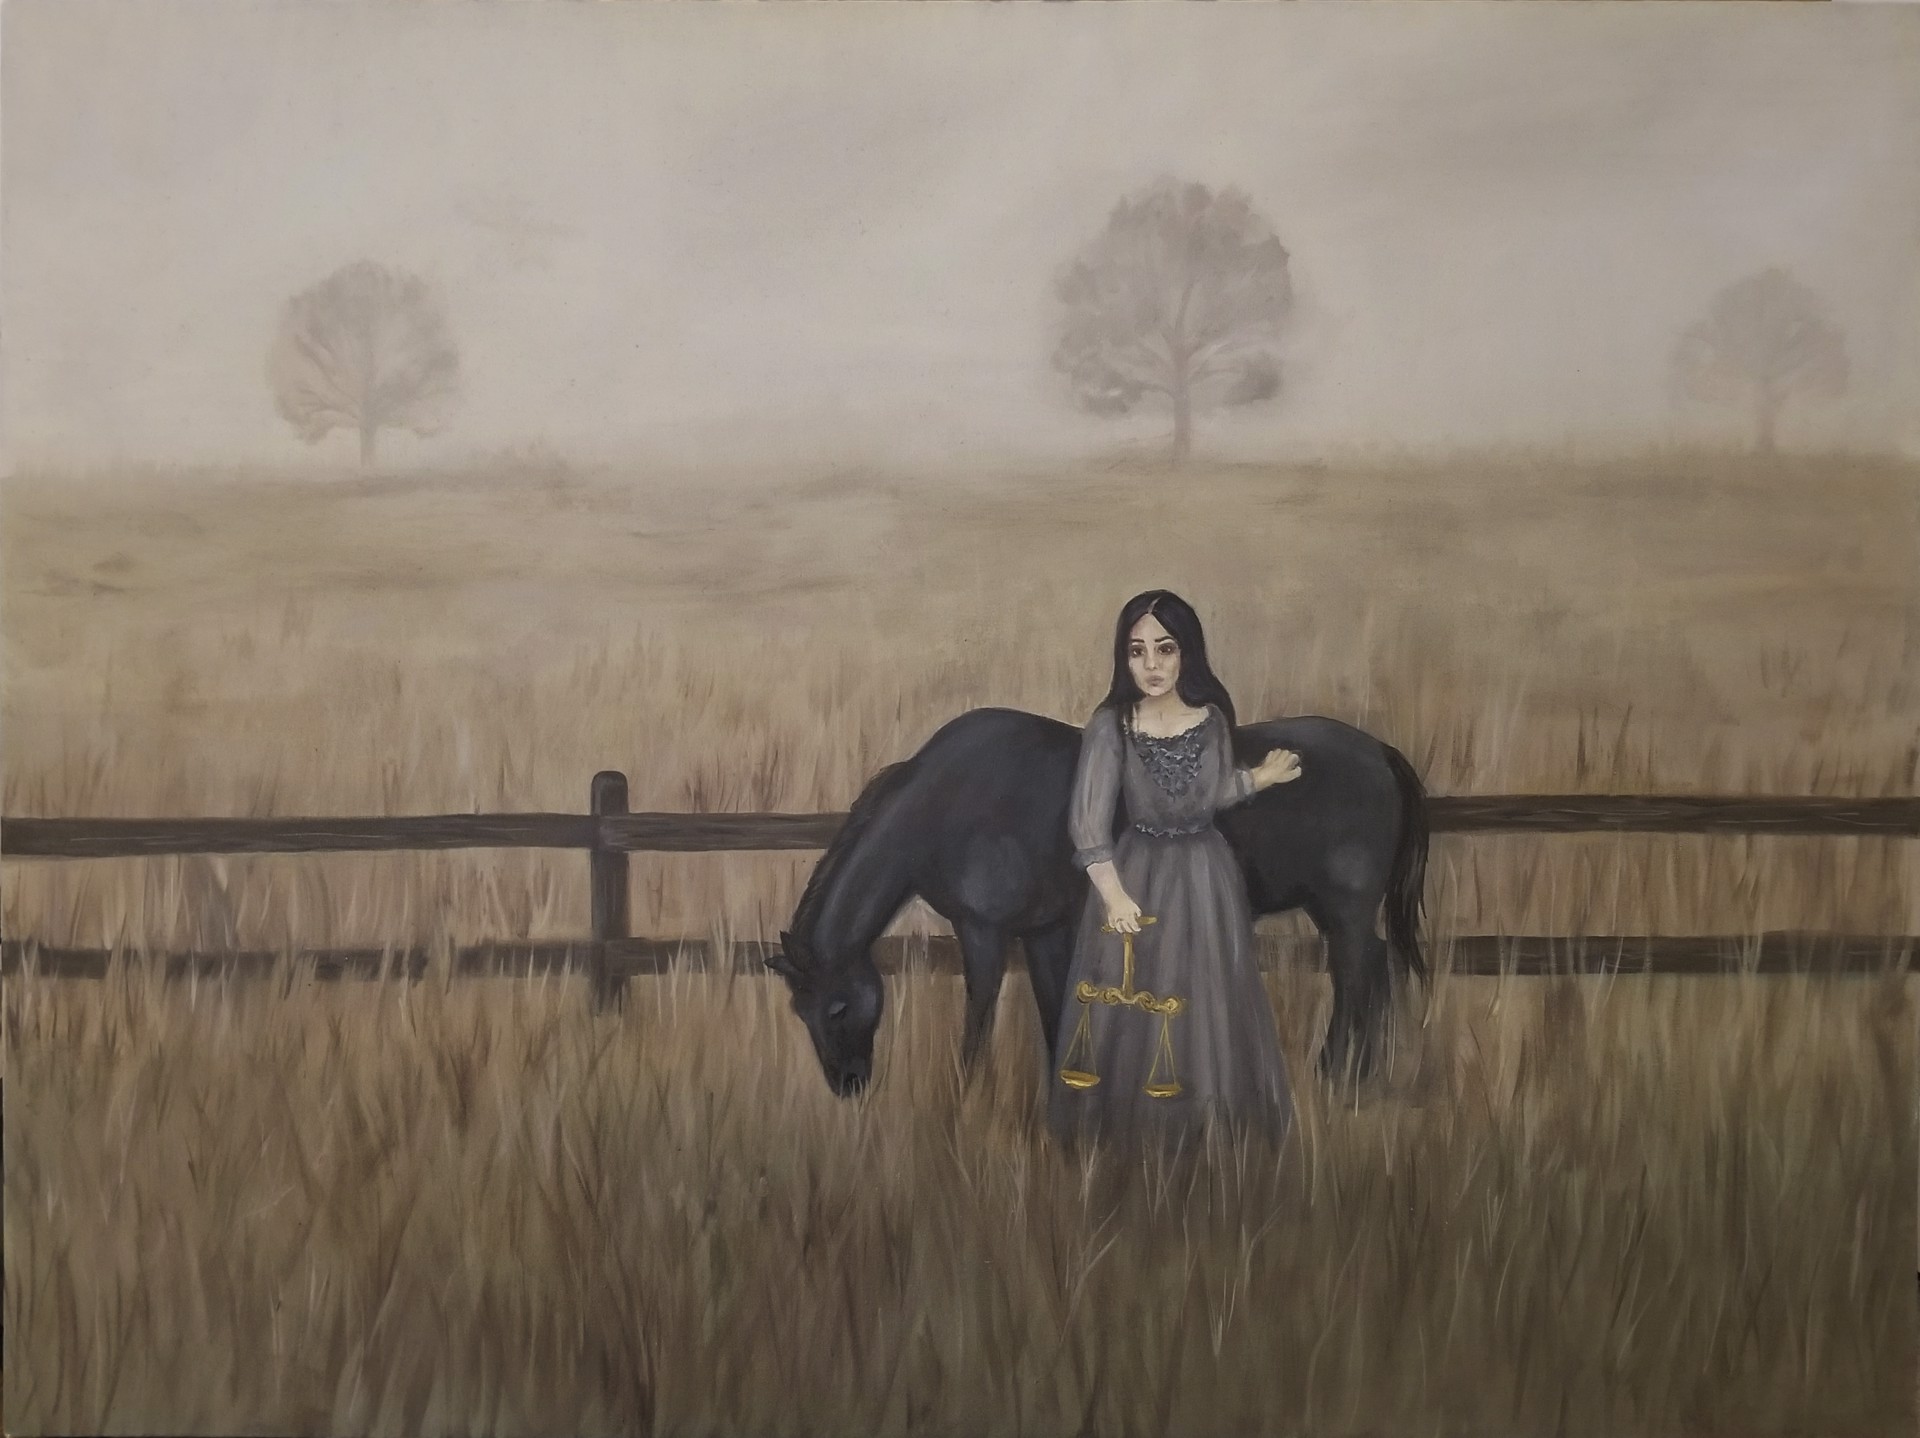 The Third Horseman: Famine by Elizabeth Sloas